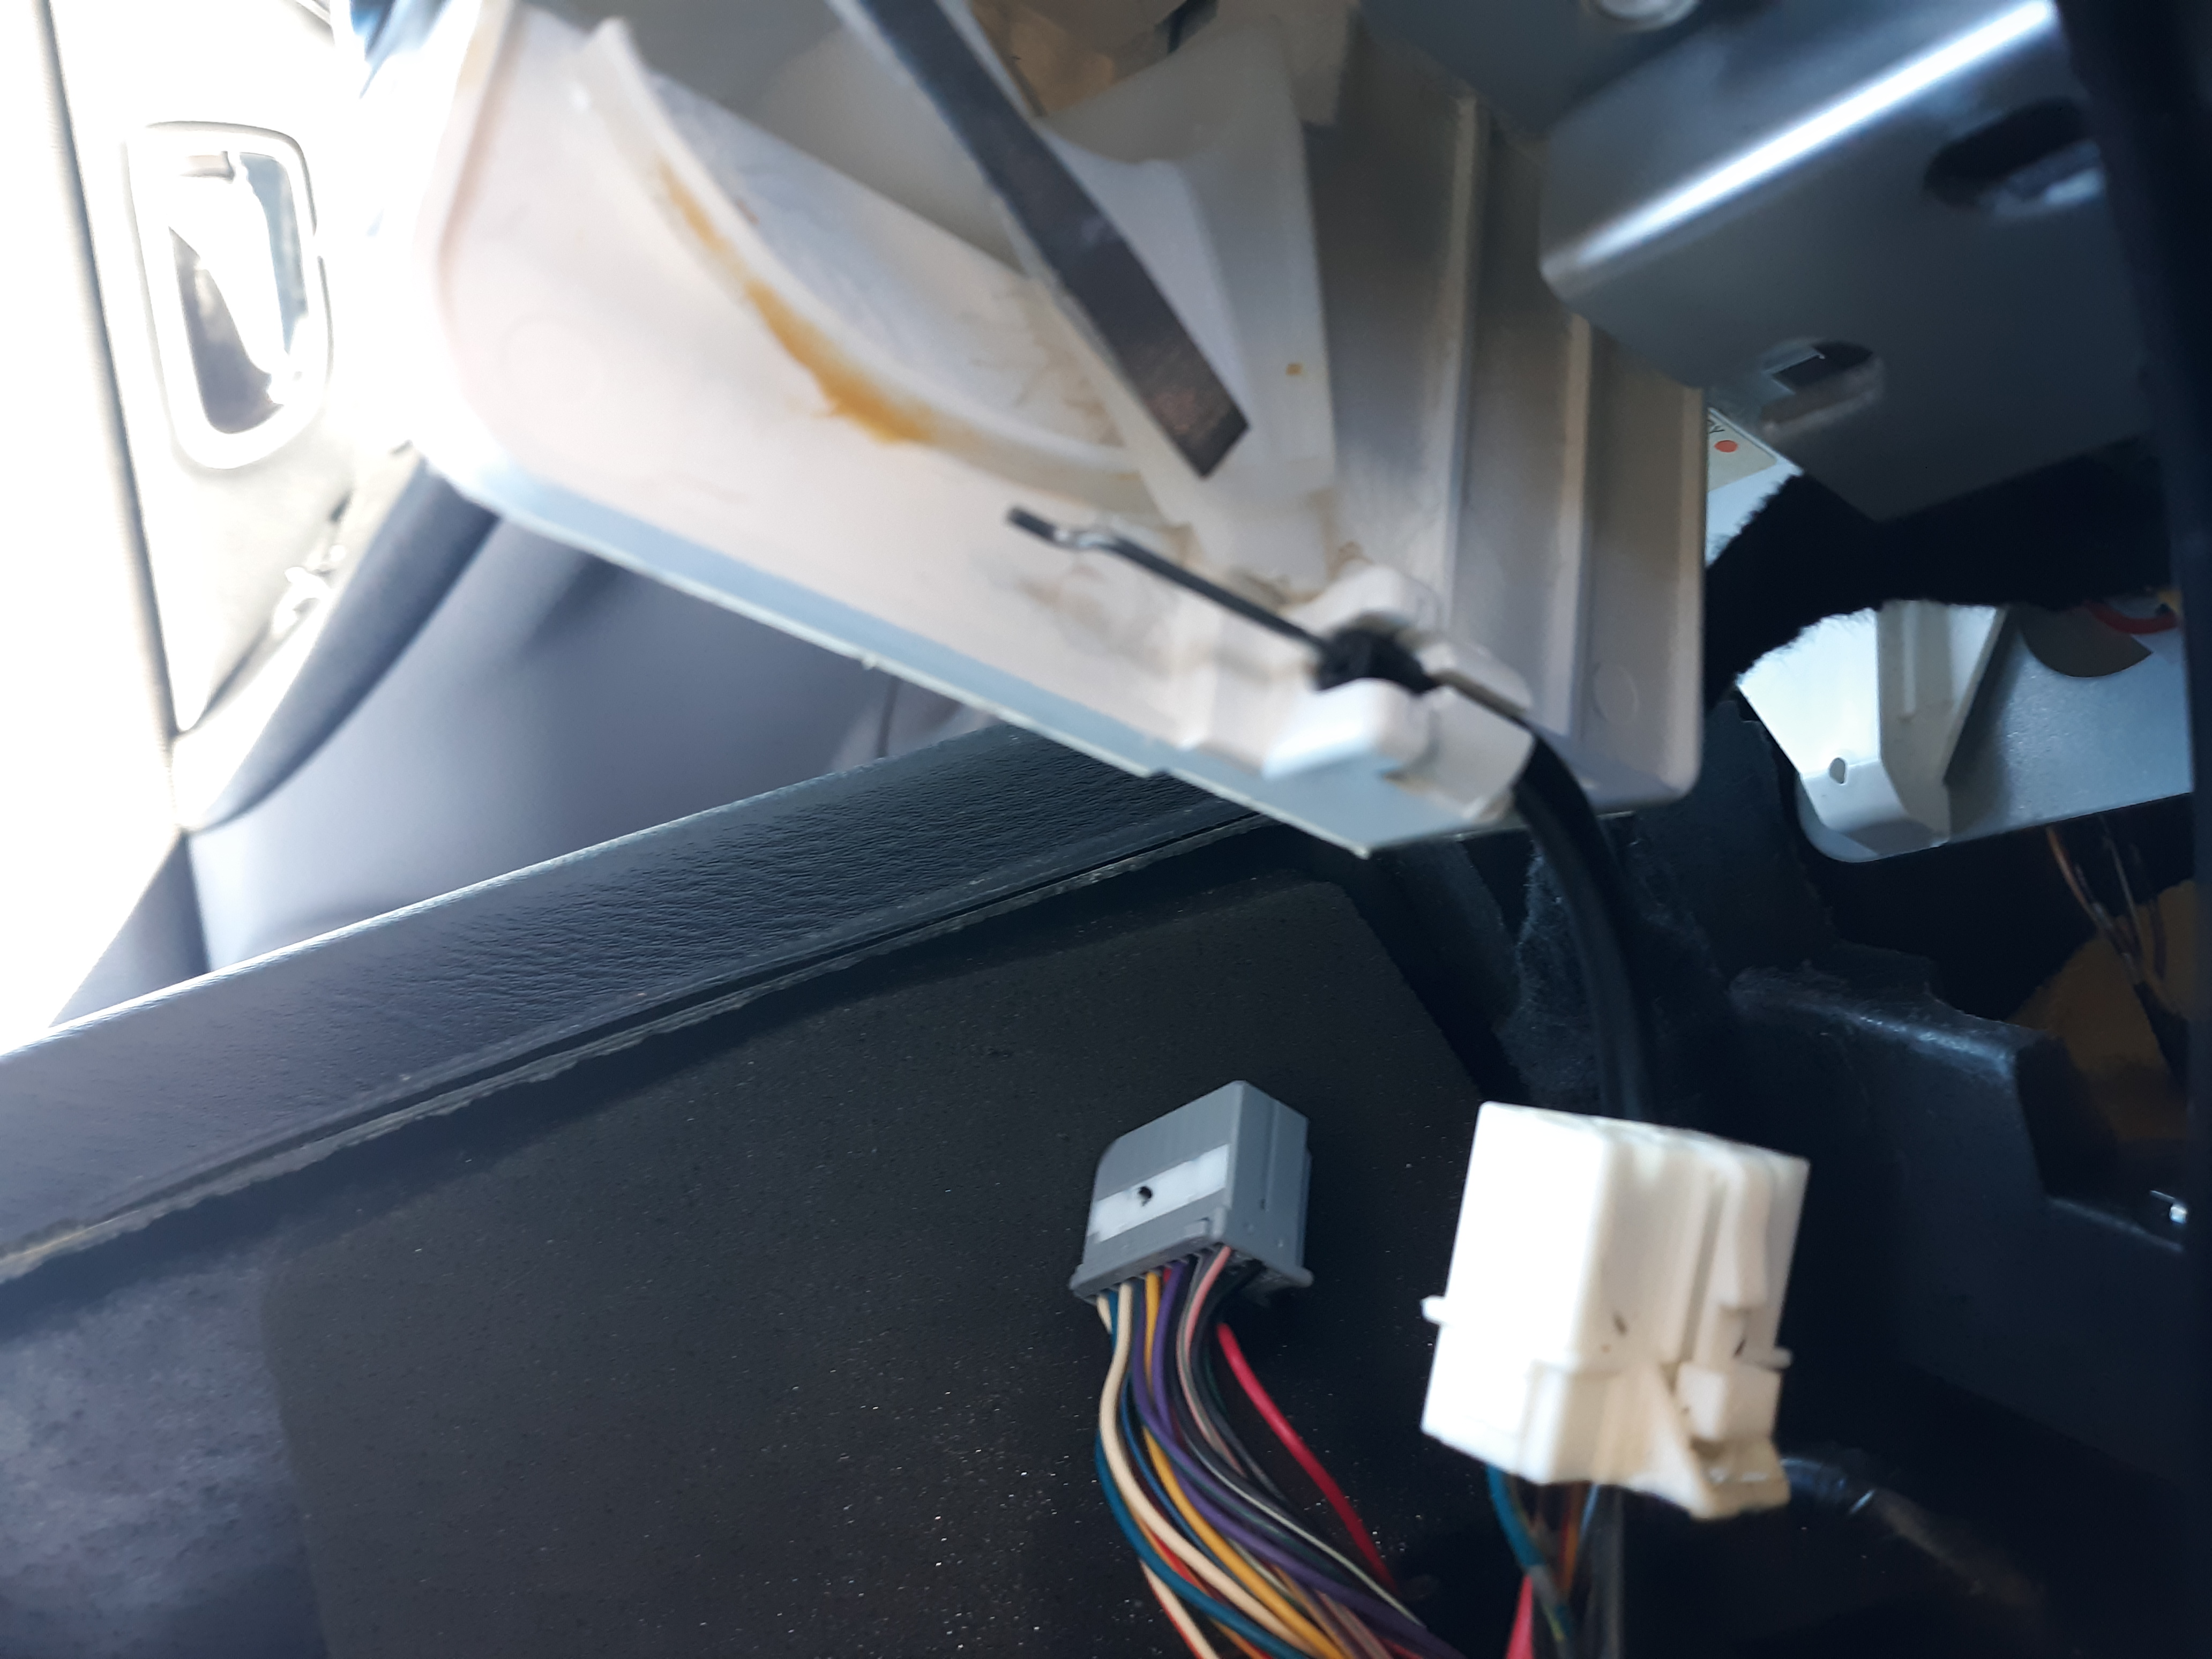 Flathead driver on broken controller